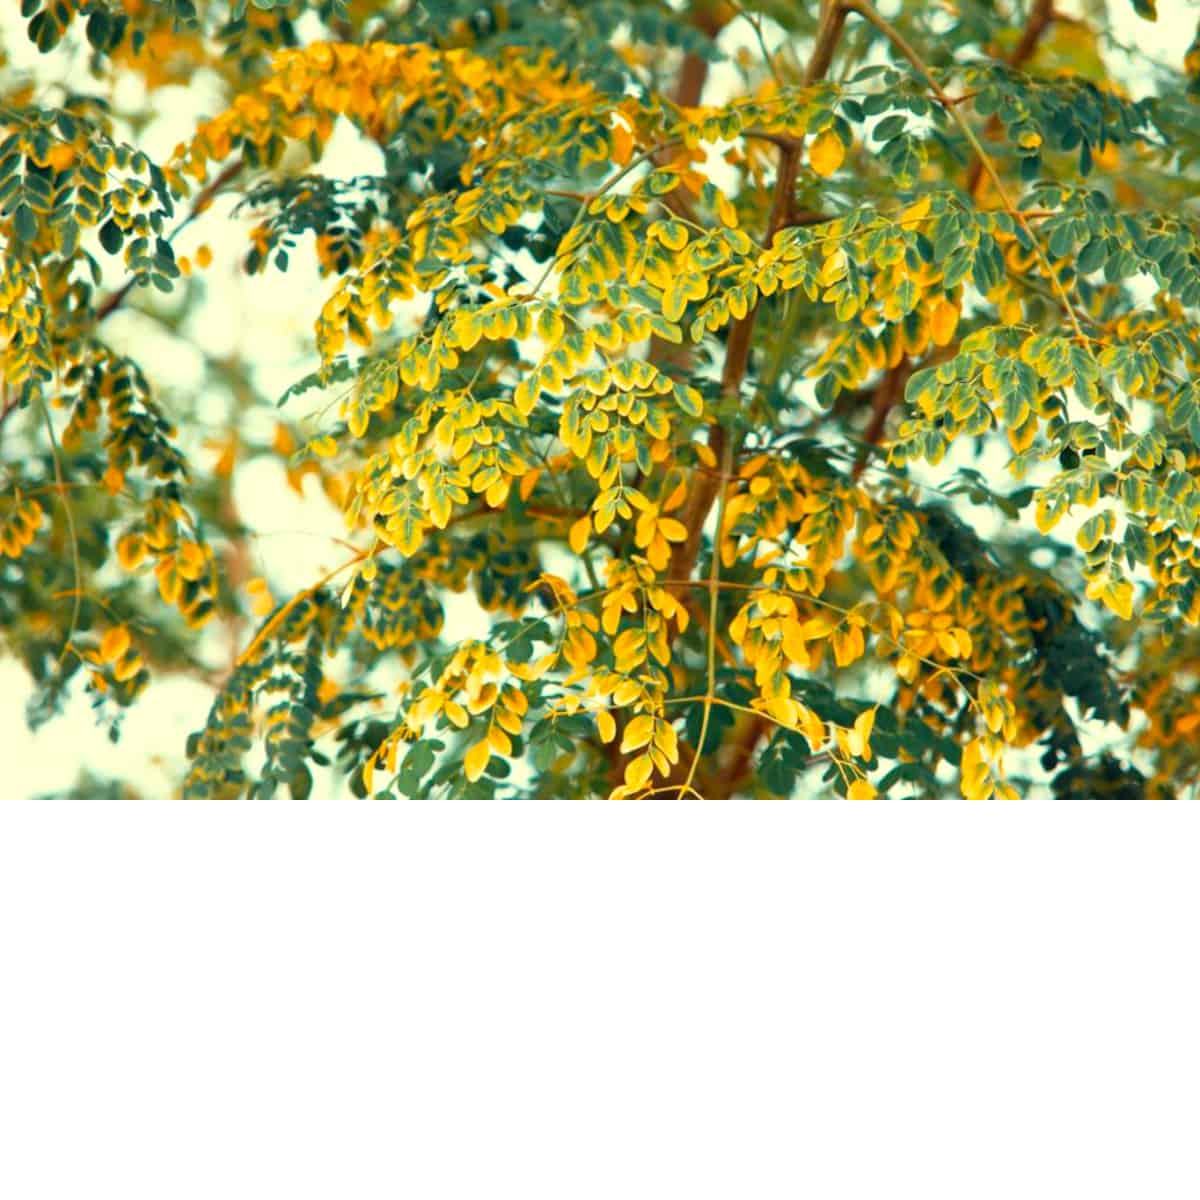 a picture of a moringa leaf tree